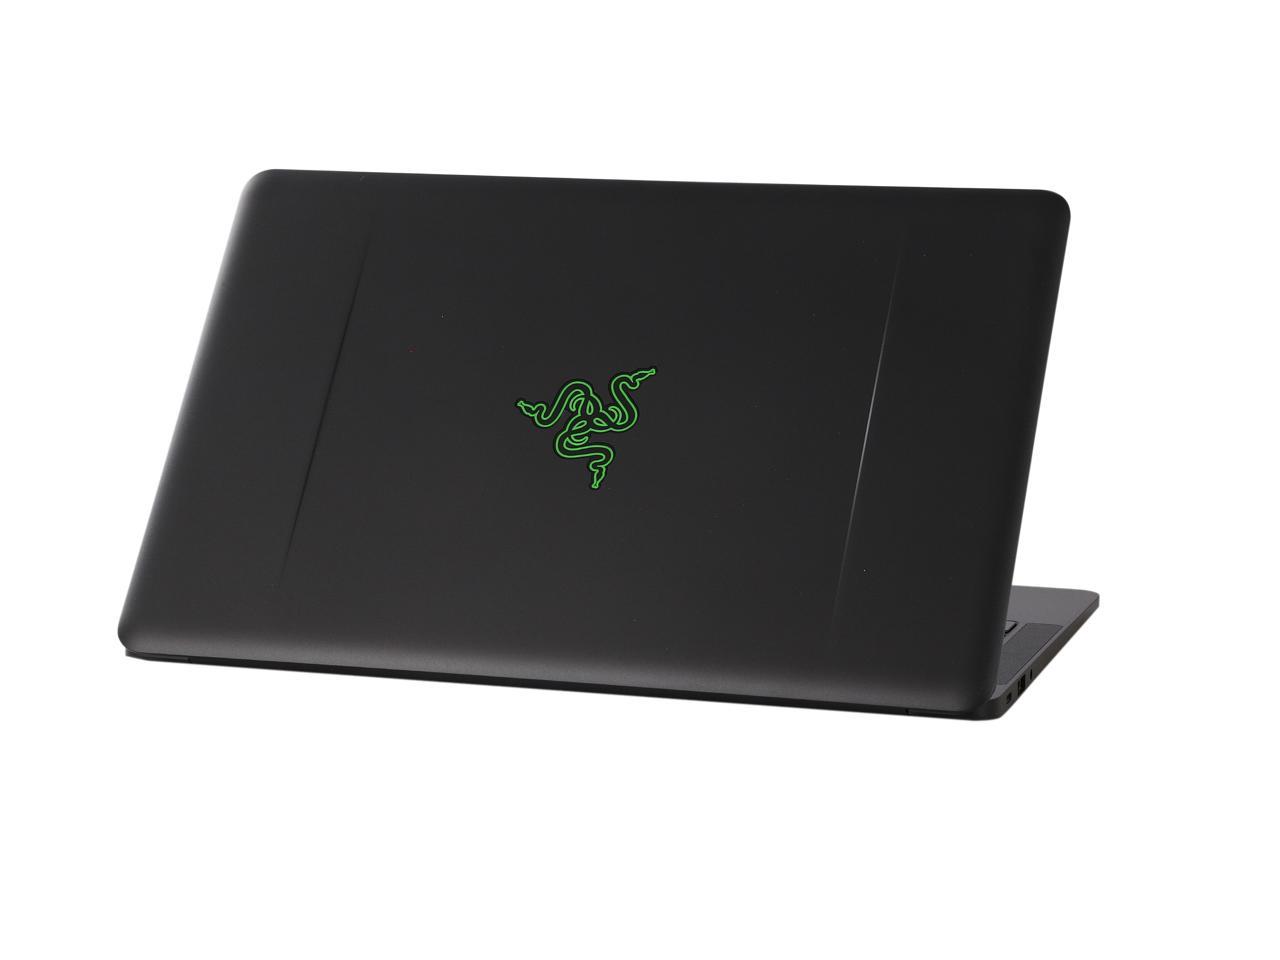 Razer Laptop Blade Stealth i7 6th Gen 6500U (2.50 GHz) - Newegg.com